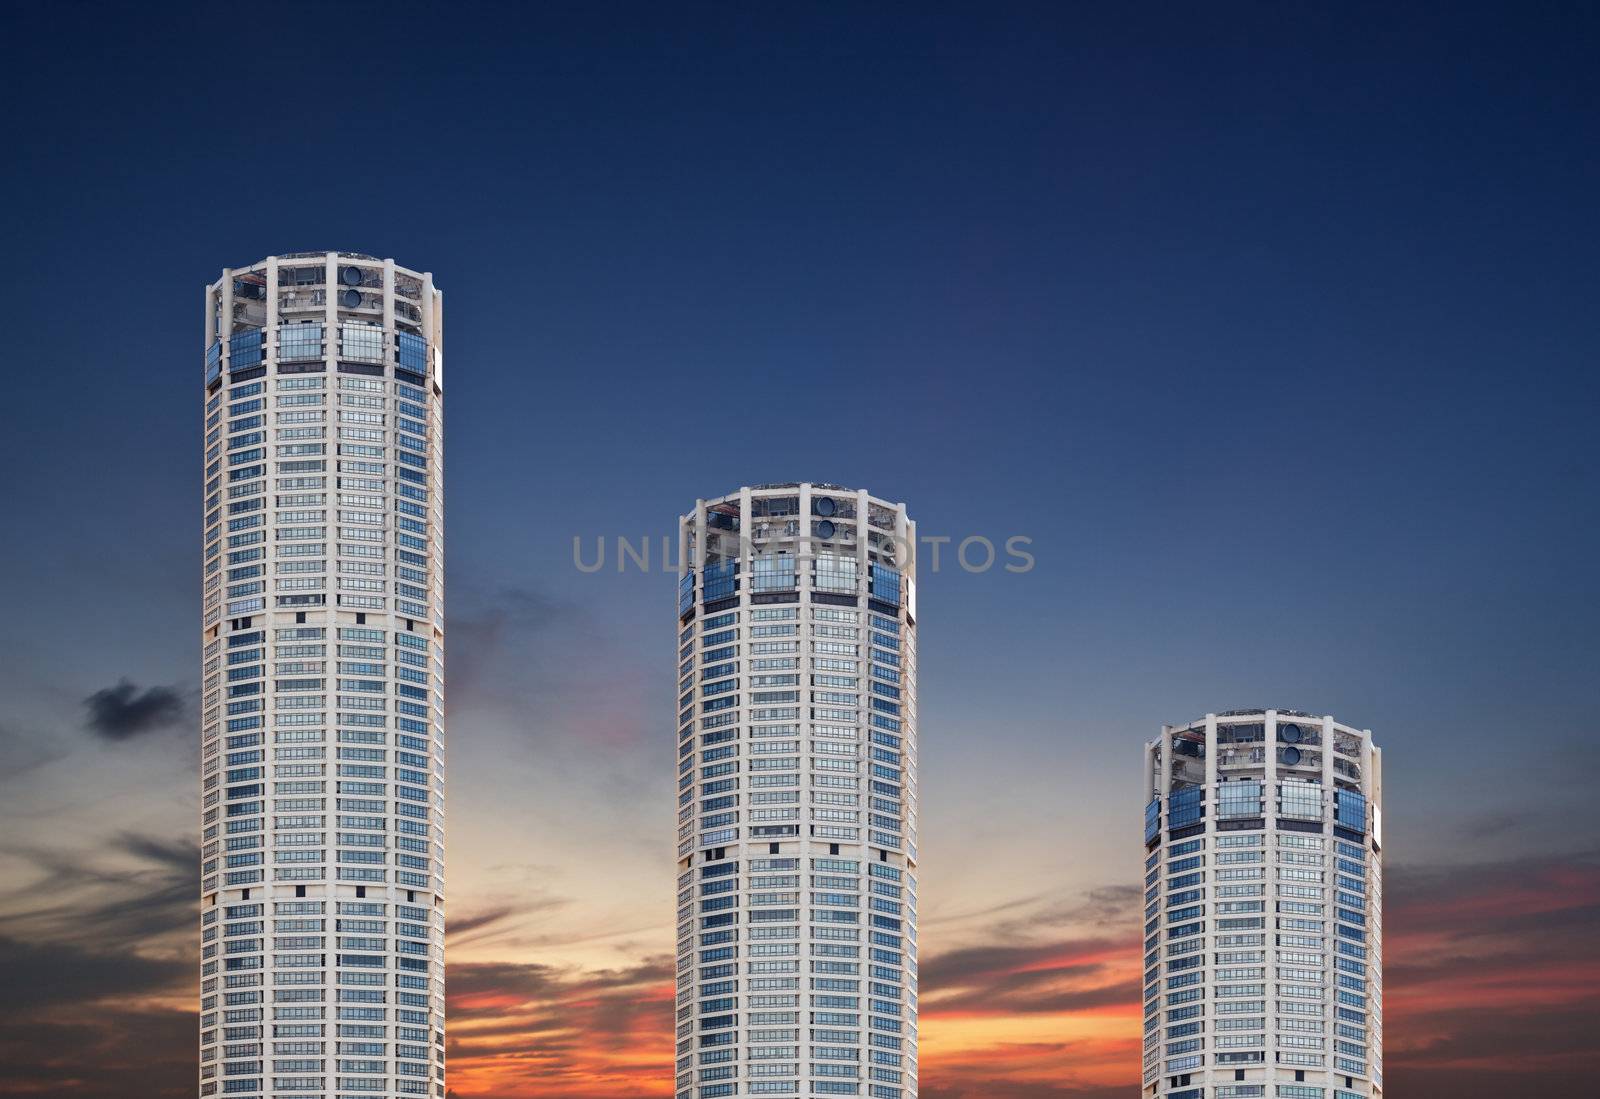 Skyscrapers on evening sky - an urban landscape